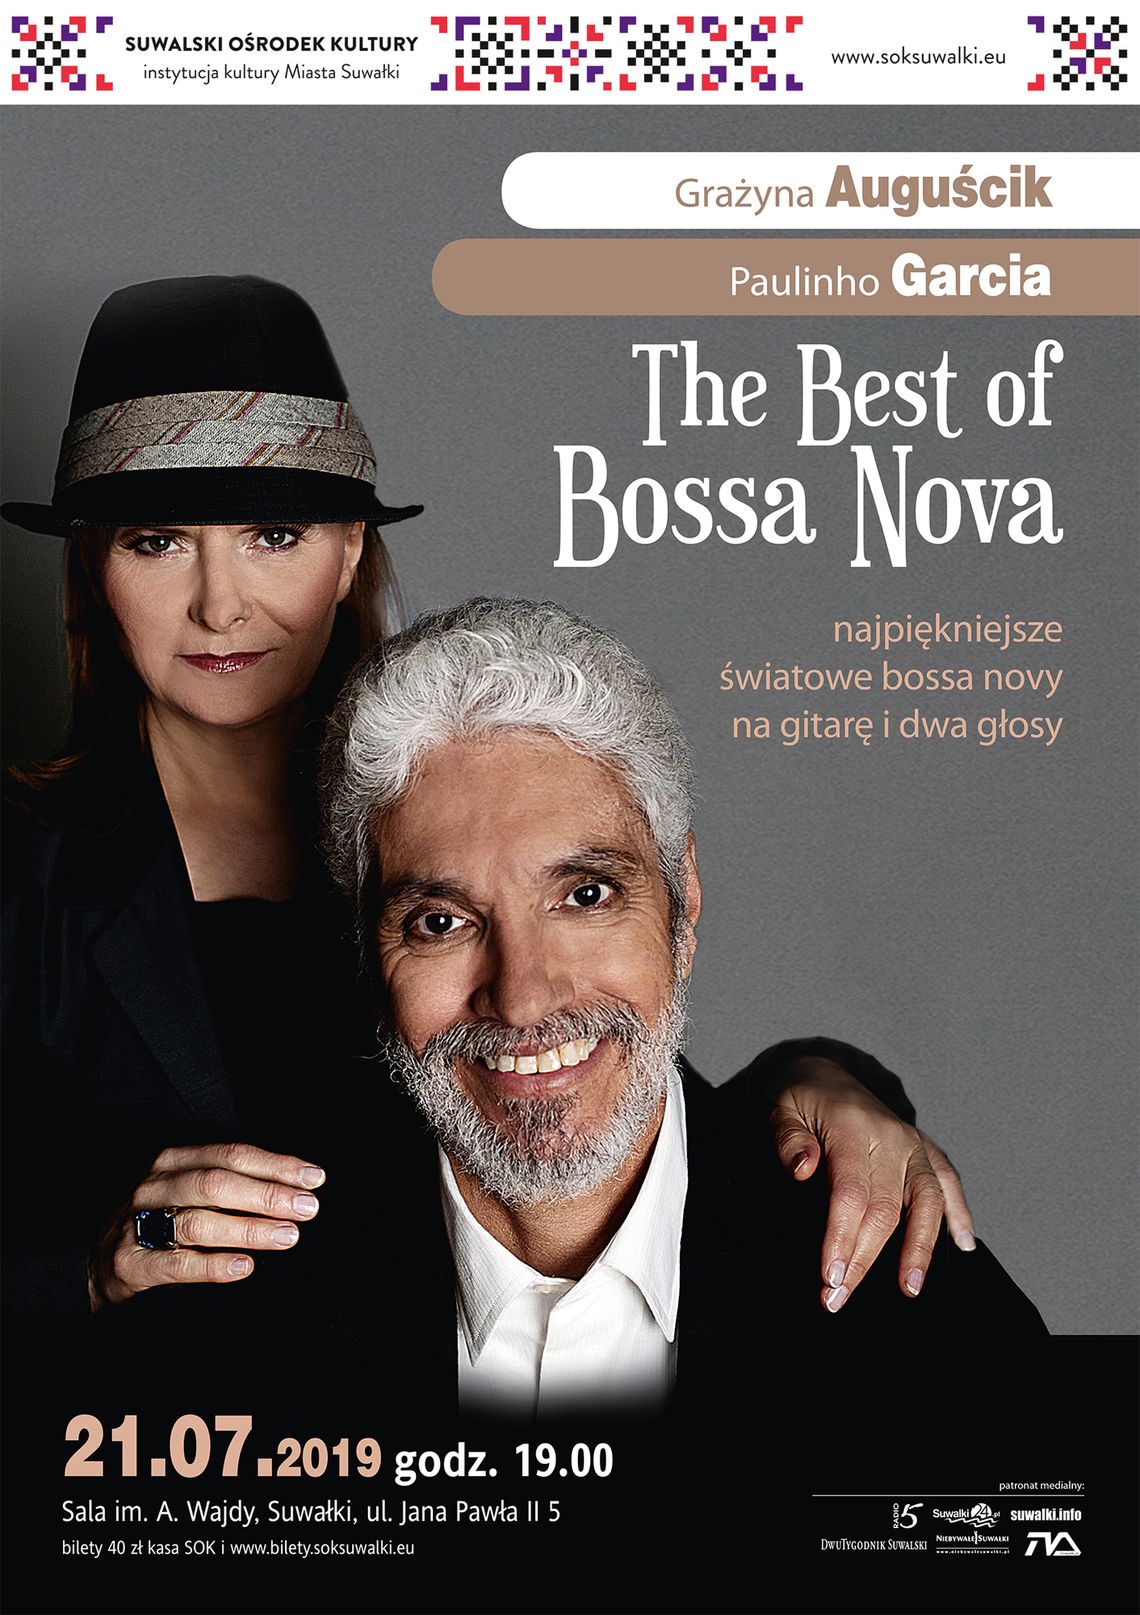 The Best of Bossa Nova - koncert Grażyny Auguścik i Paulinho Garcii 